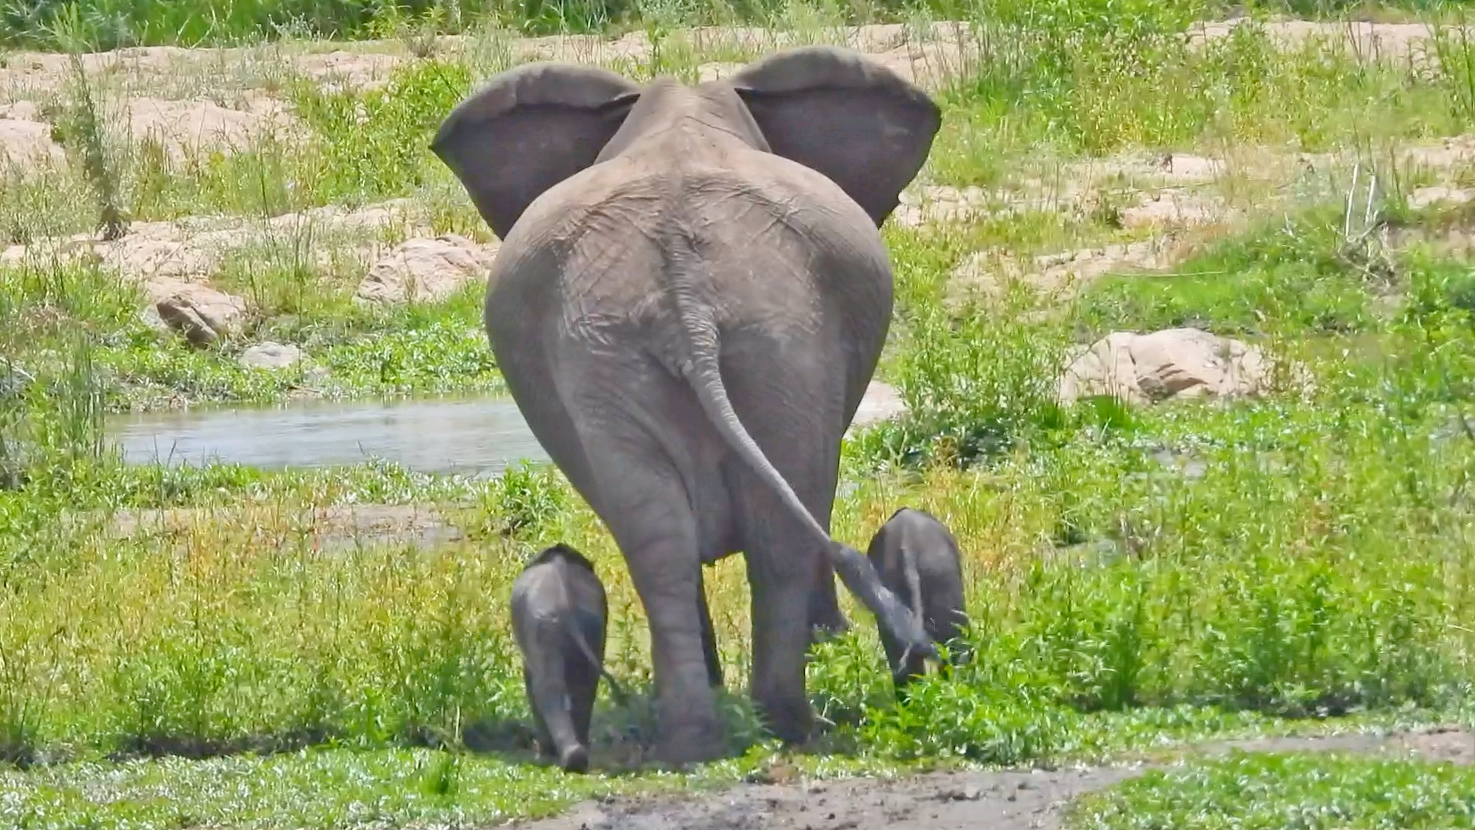 3 - The Elephant Calf